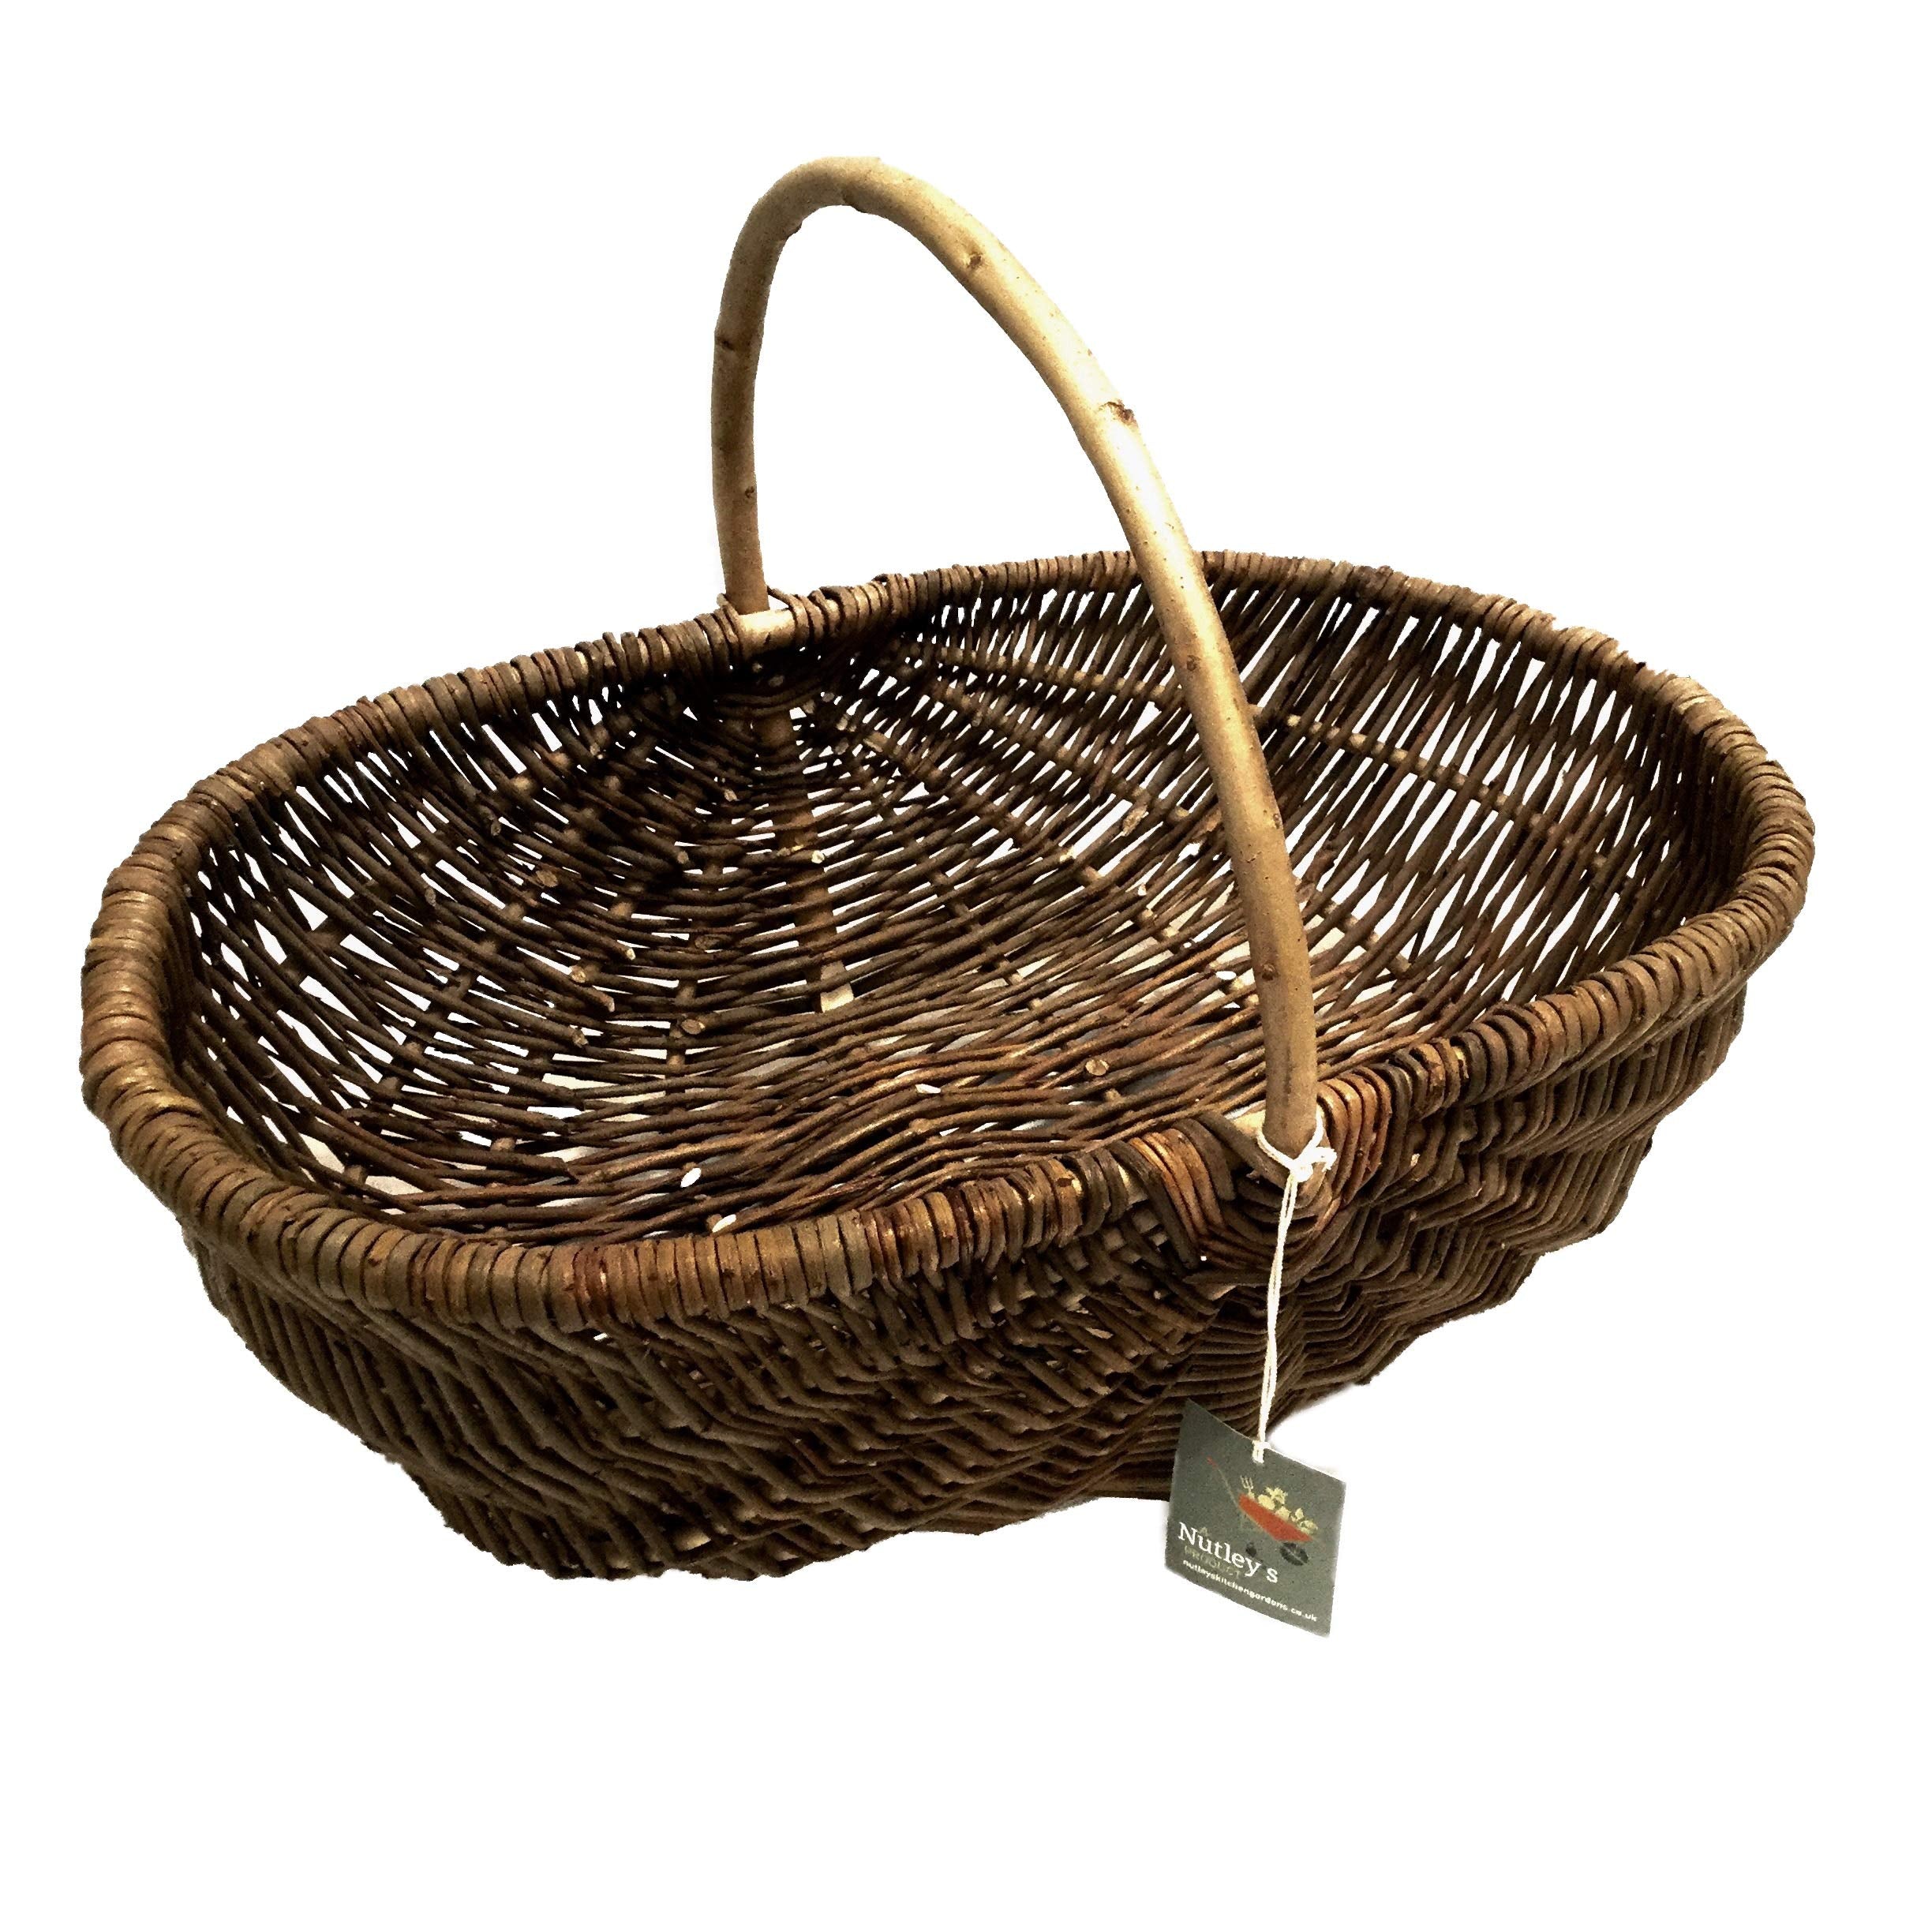 Nutley's Large Rustic Willow Vegetable Trug Basket